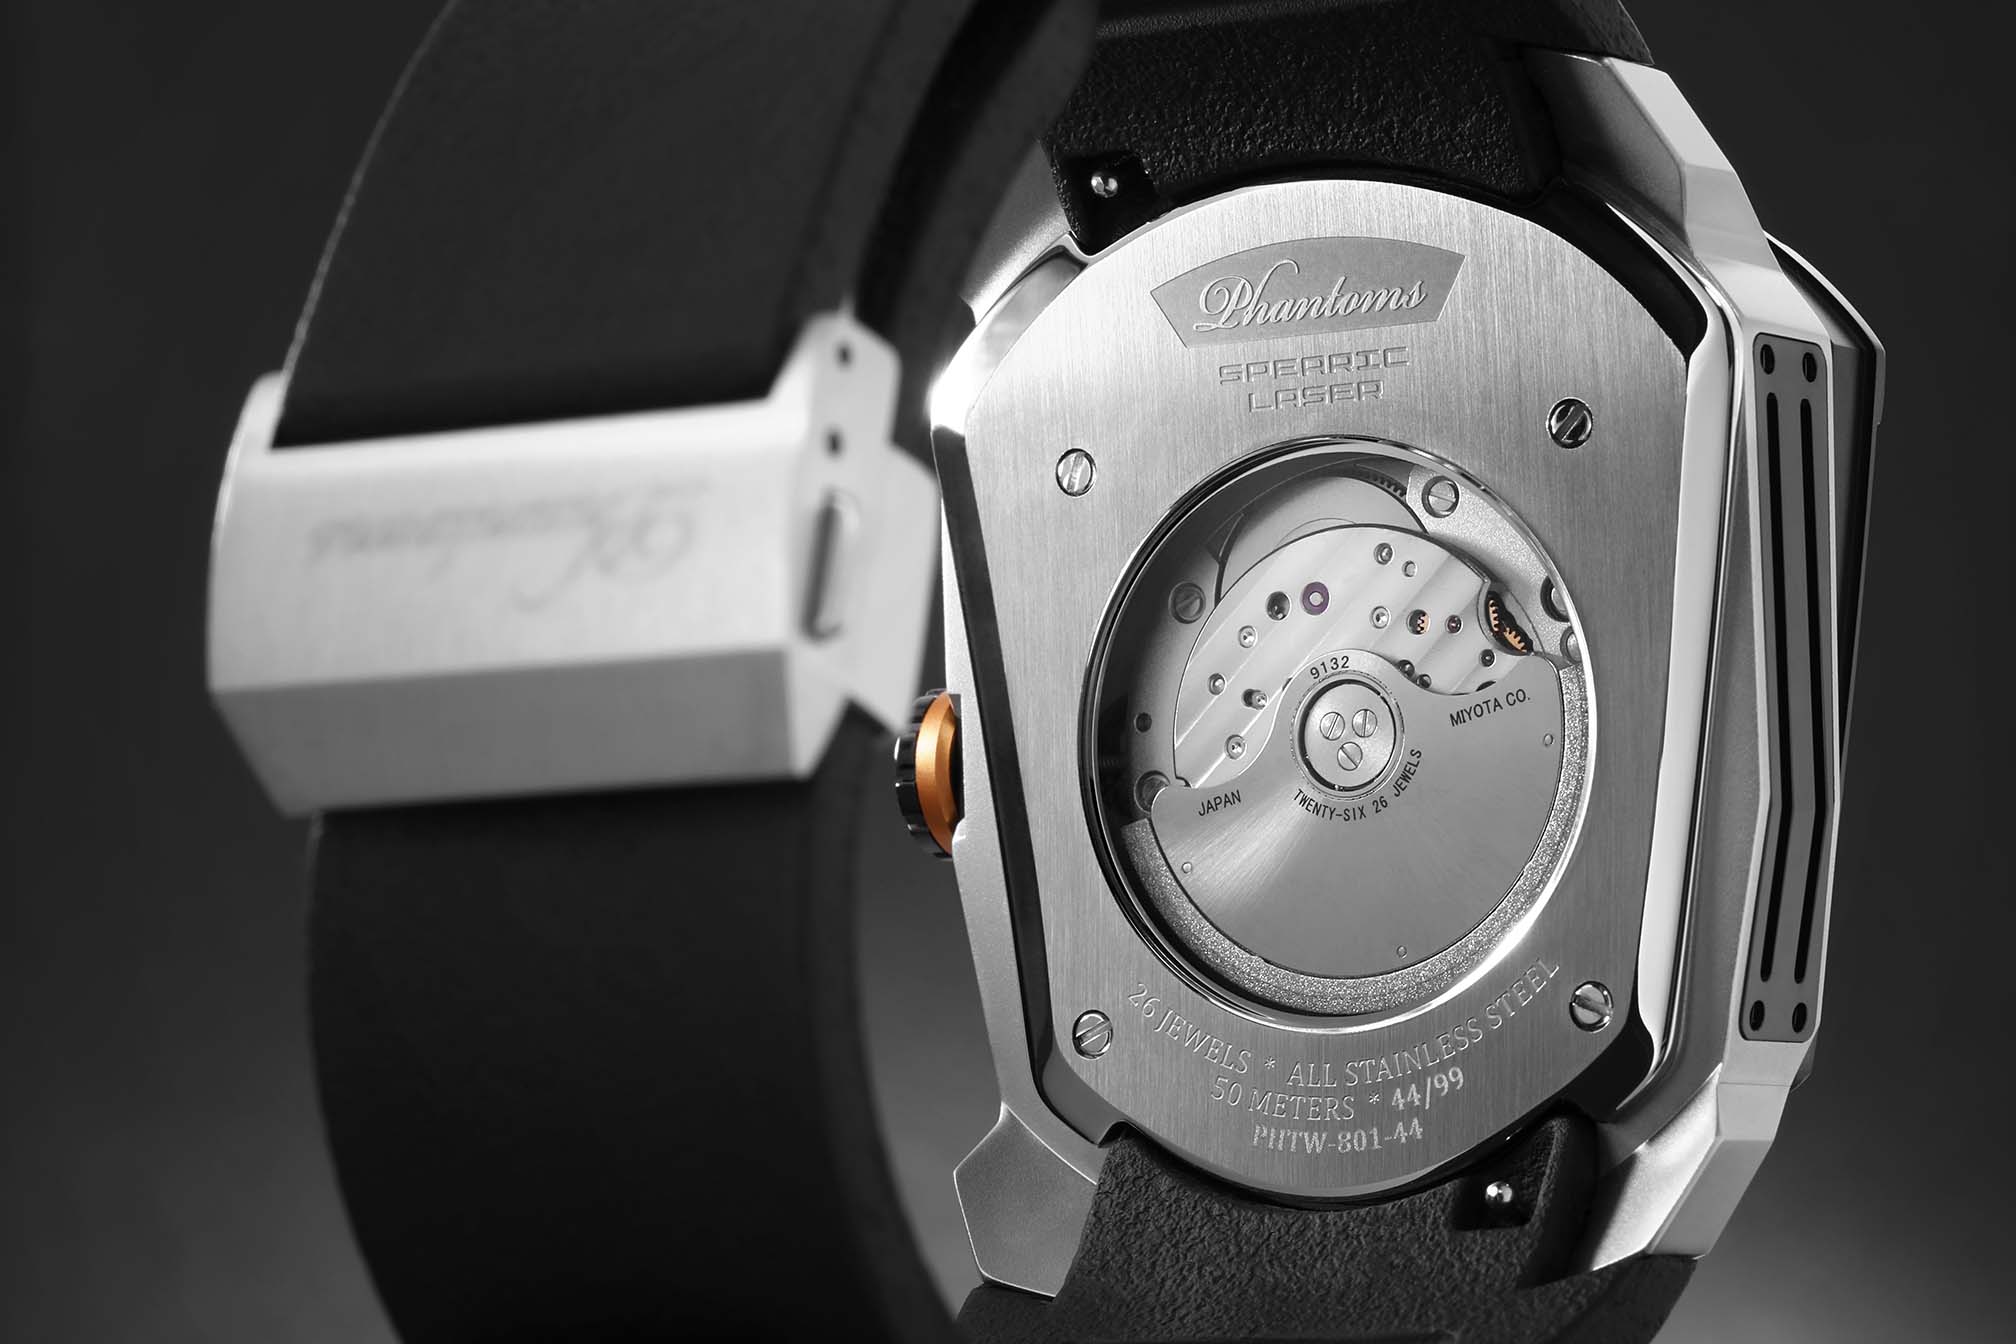 Spearic Laser Series Japanese Miyota Automatic Watch, Phantoms Watch Tourbillon, Sporty Mechanical Watch For Men